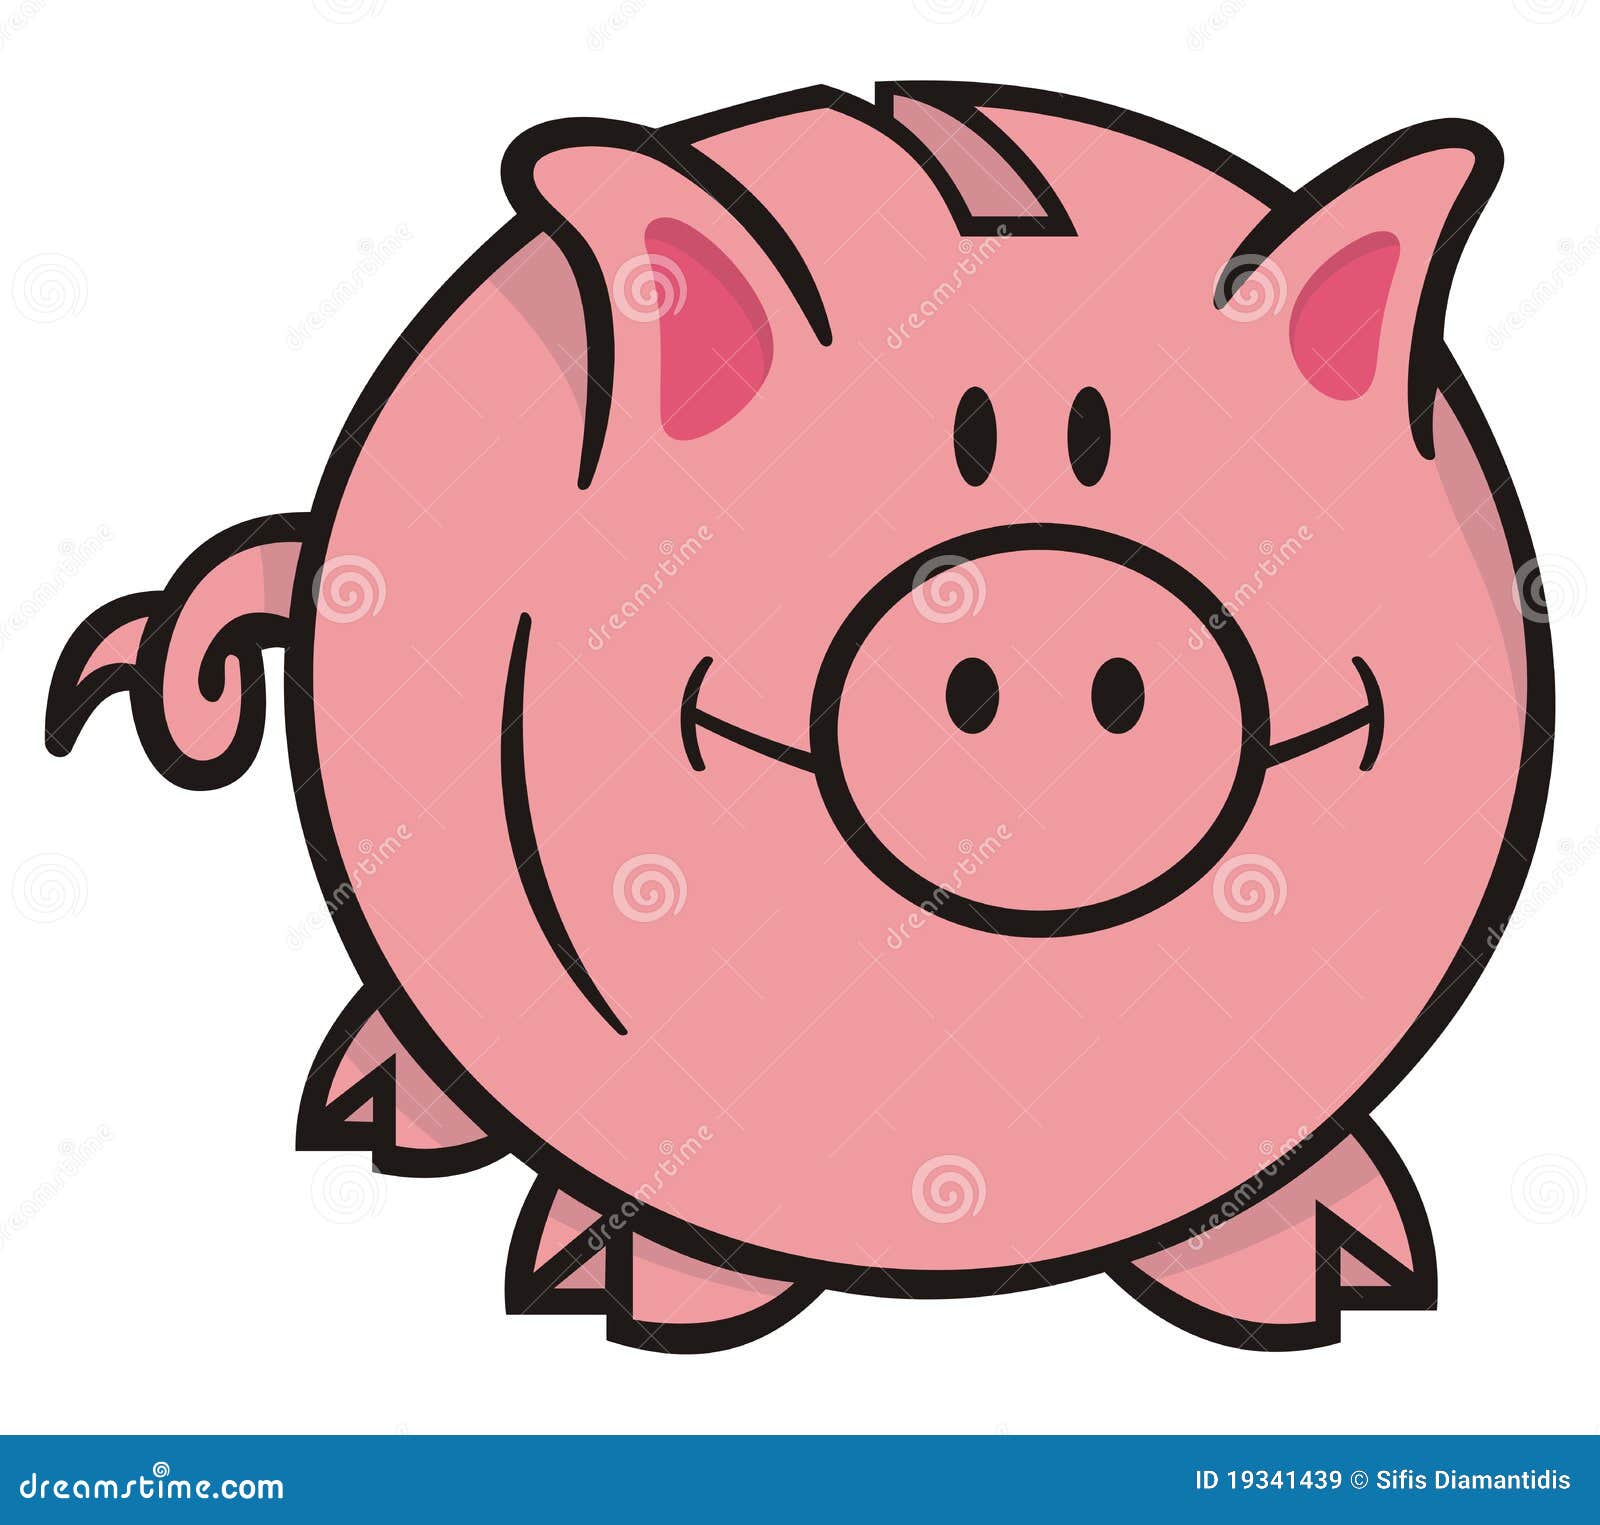 Piggy bank stock vector. Illustration of pink, banking - 19341439